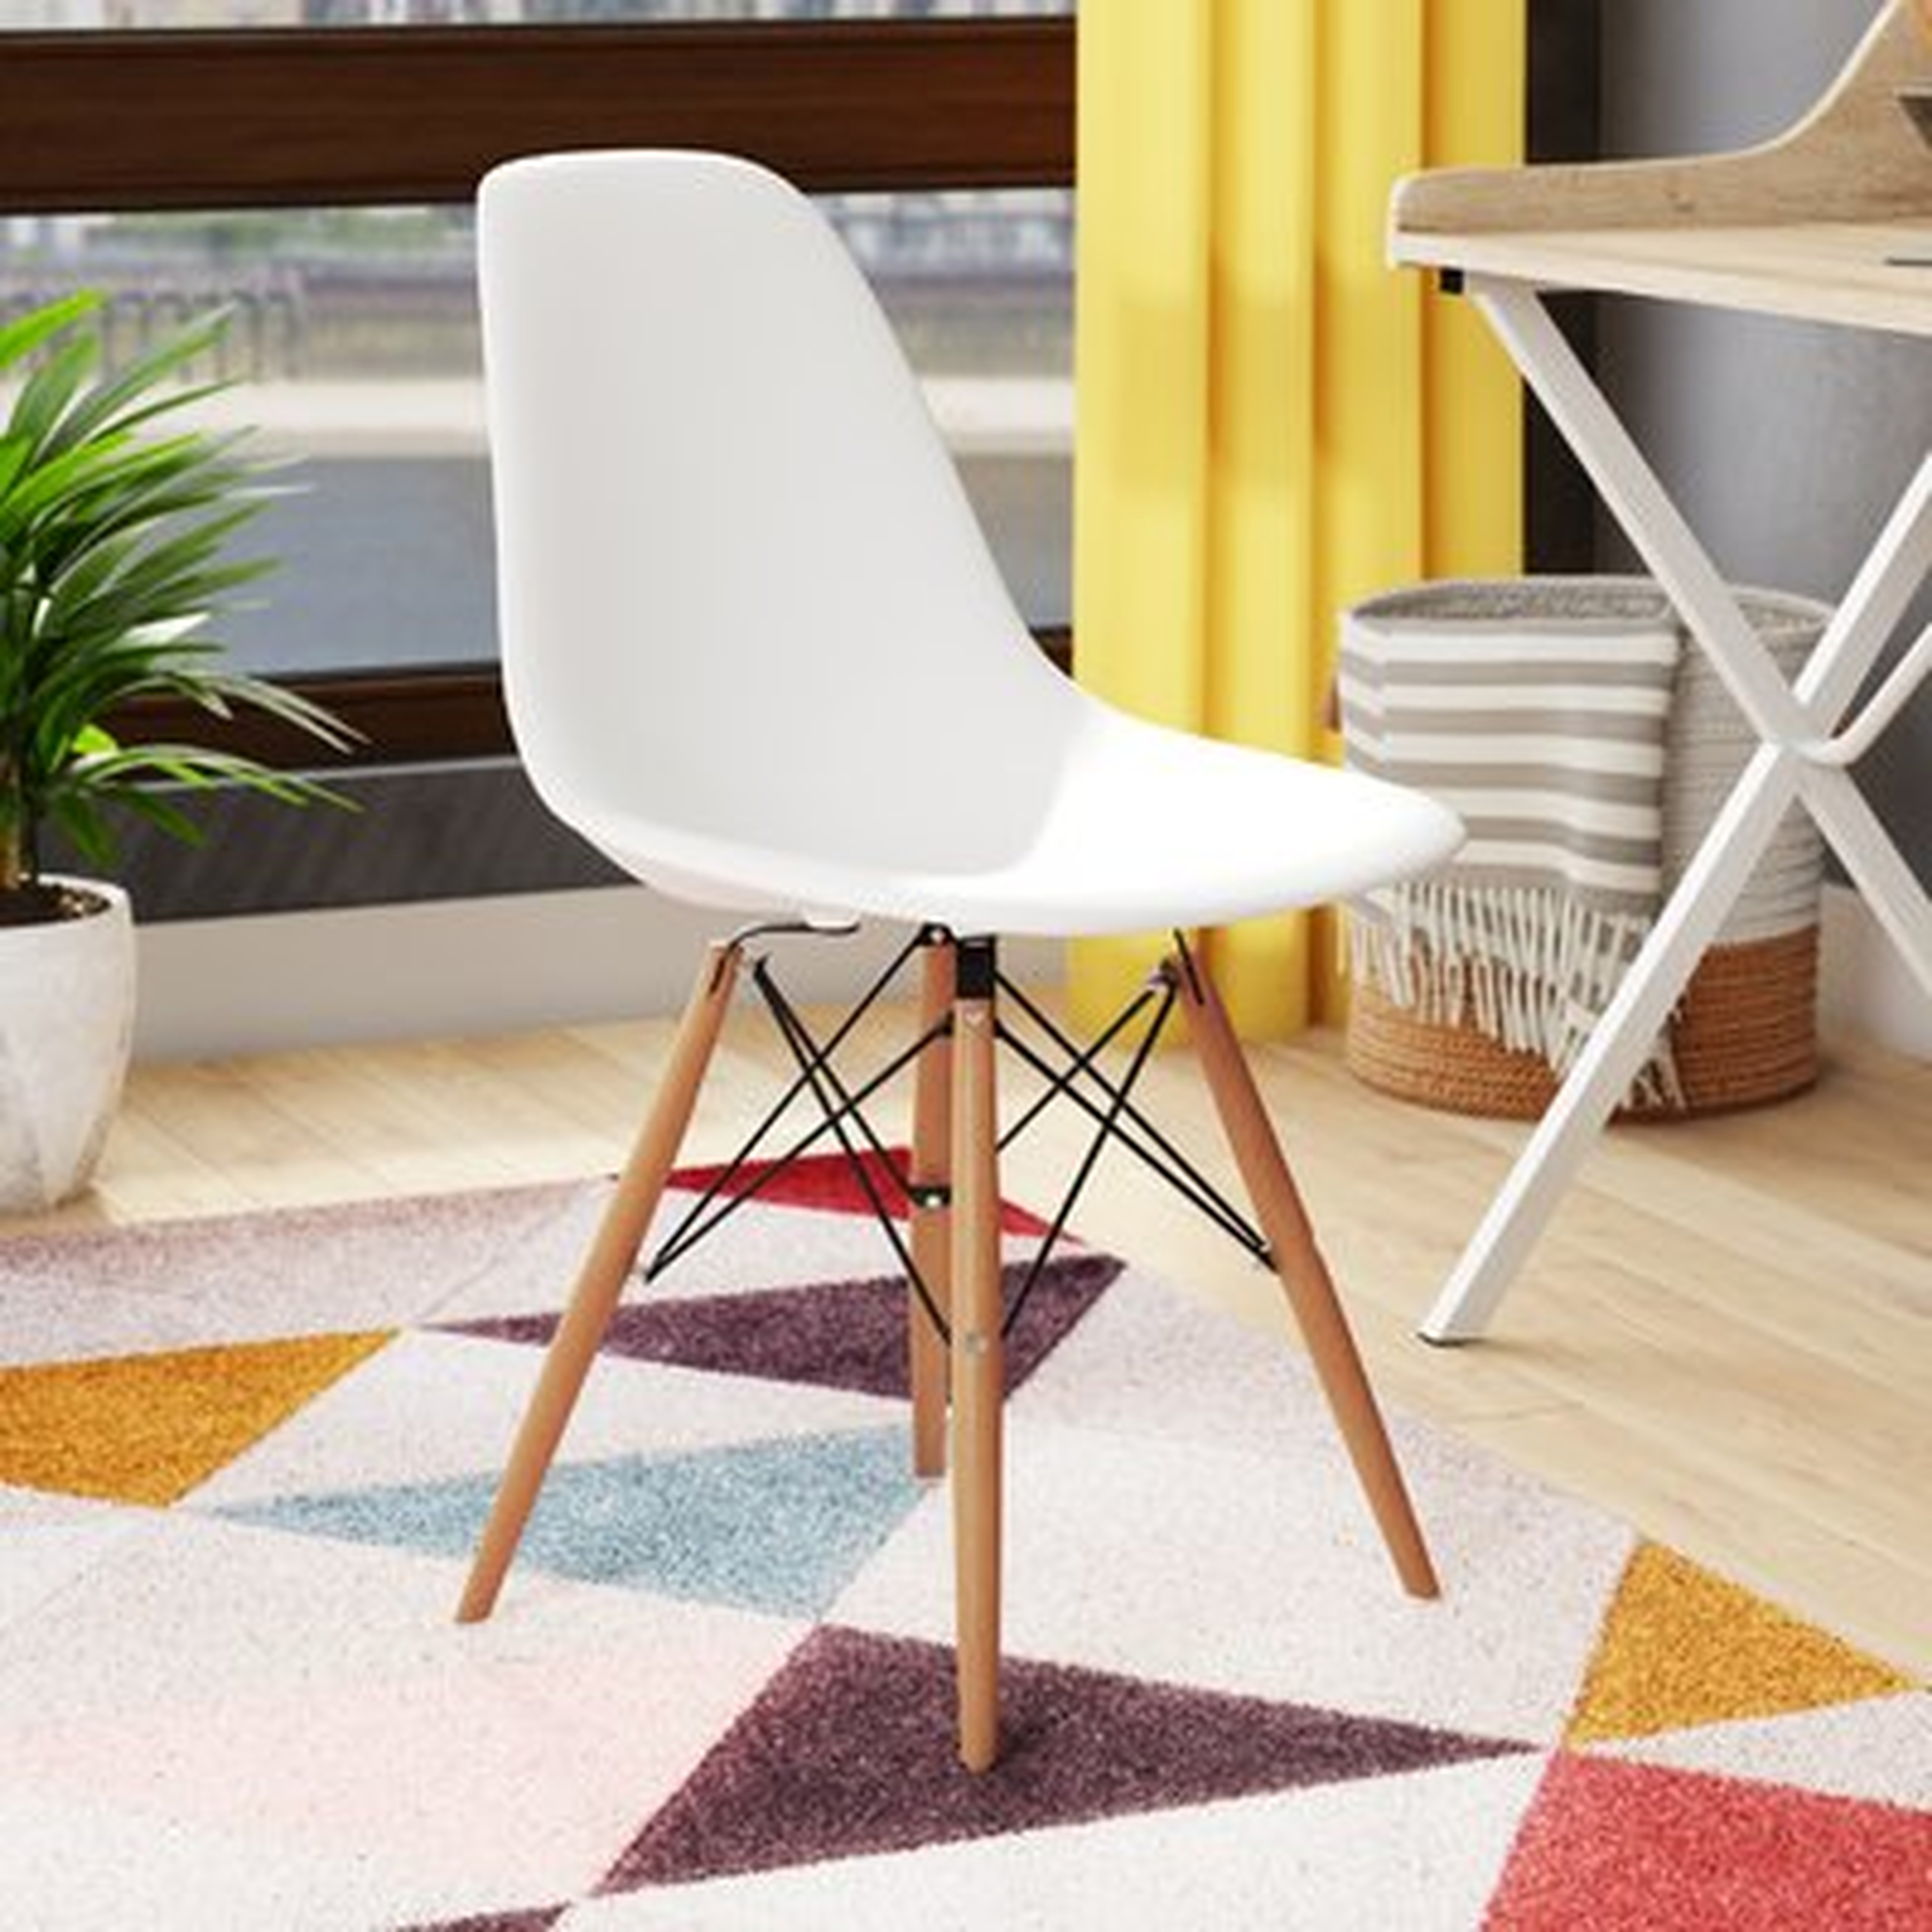 Wrenshall Plastic Side Chair - Wayfair